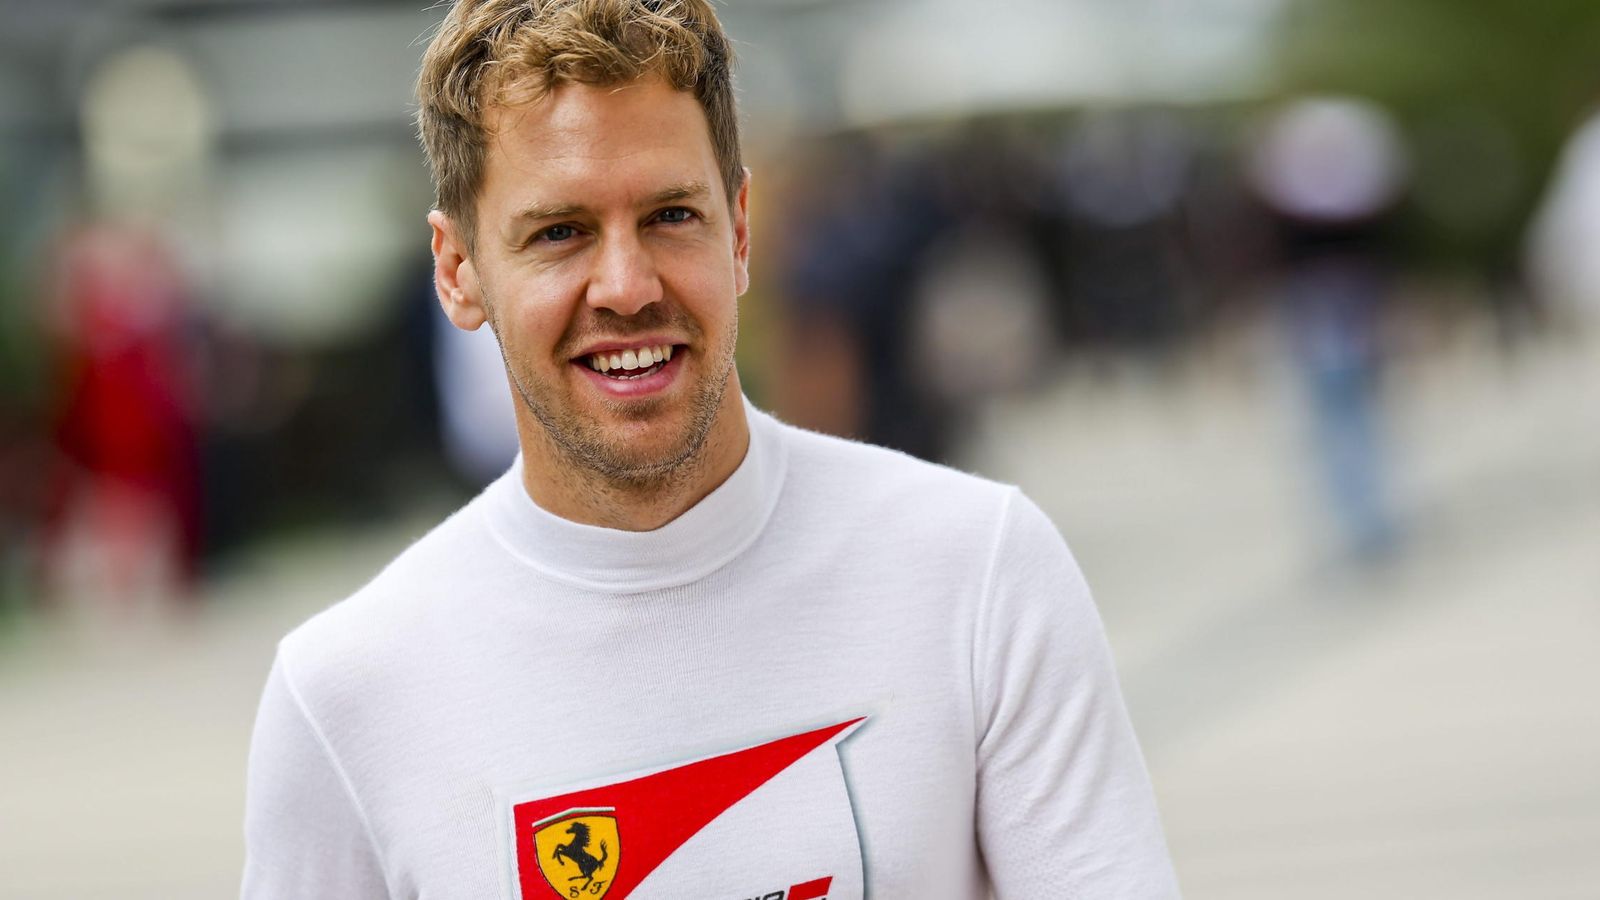 Foto: Sebastian Vettel, piloto de Ferrari desde hace un año.